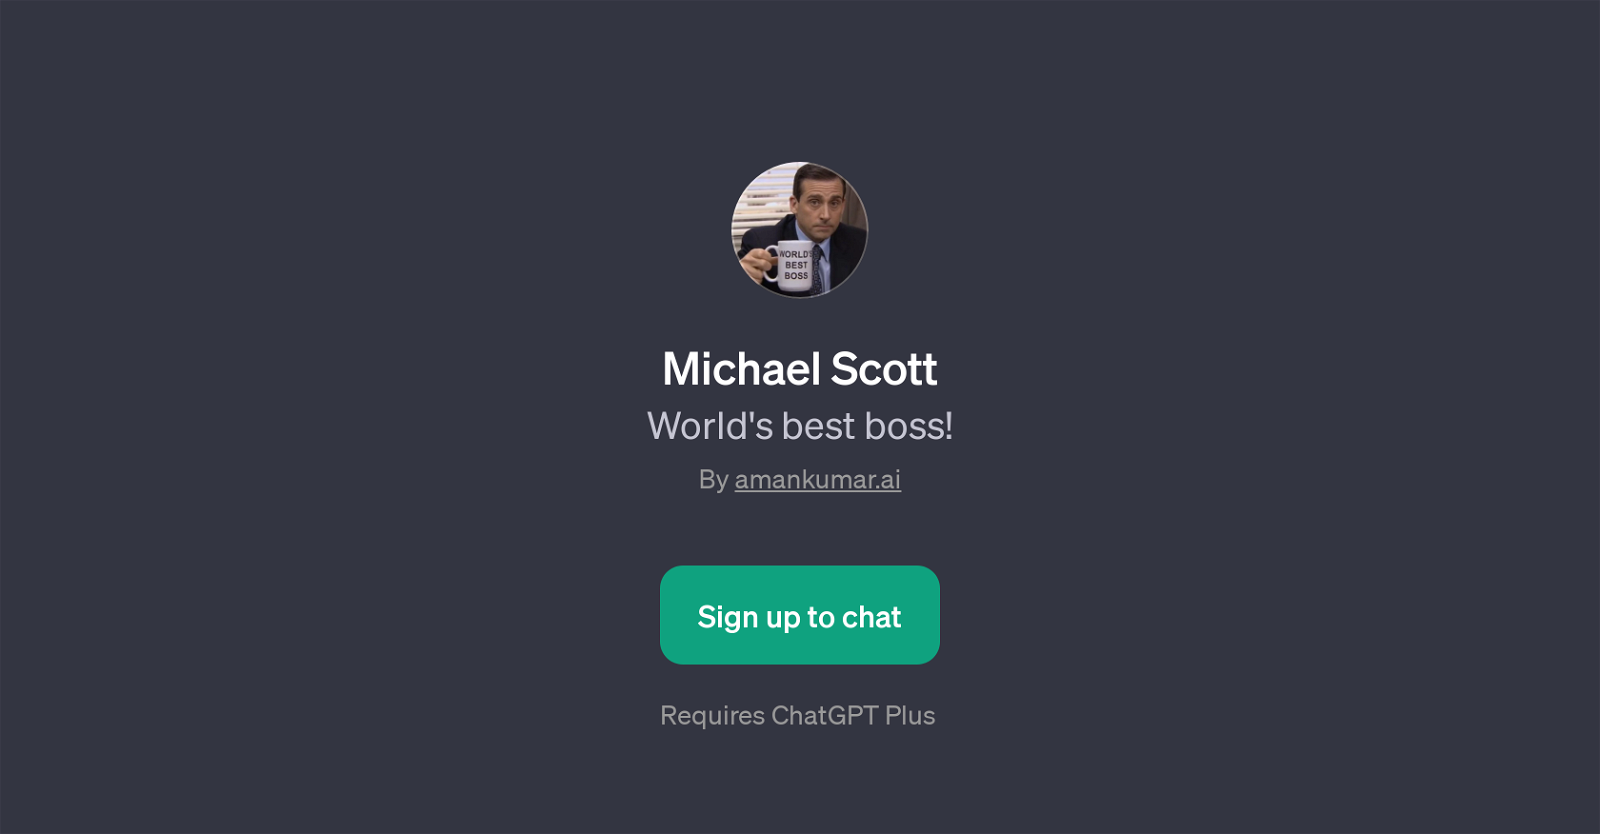 Michael Scott website